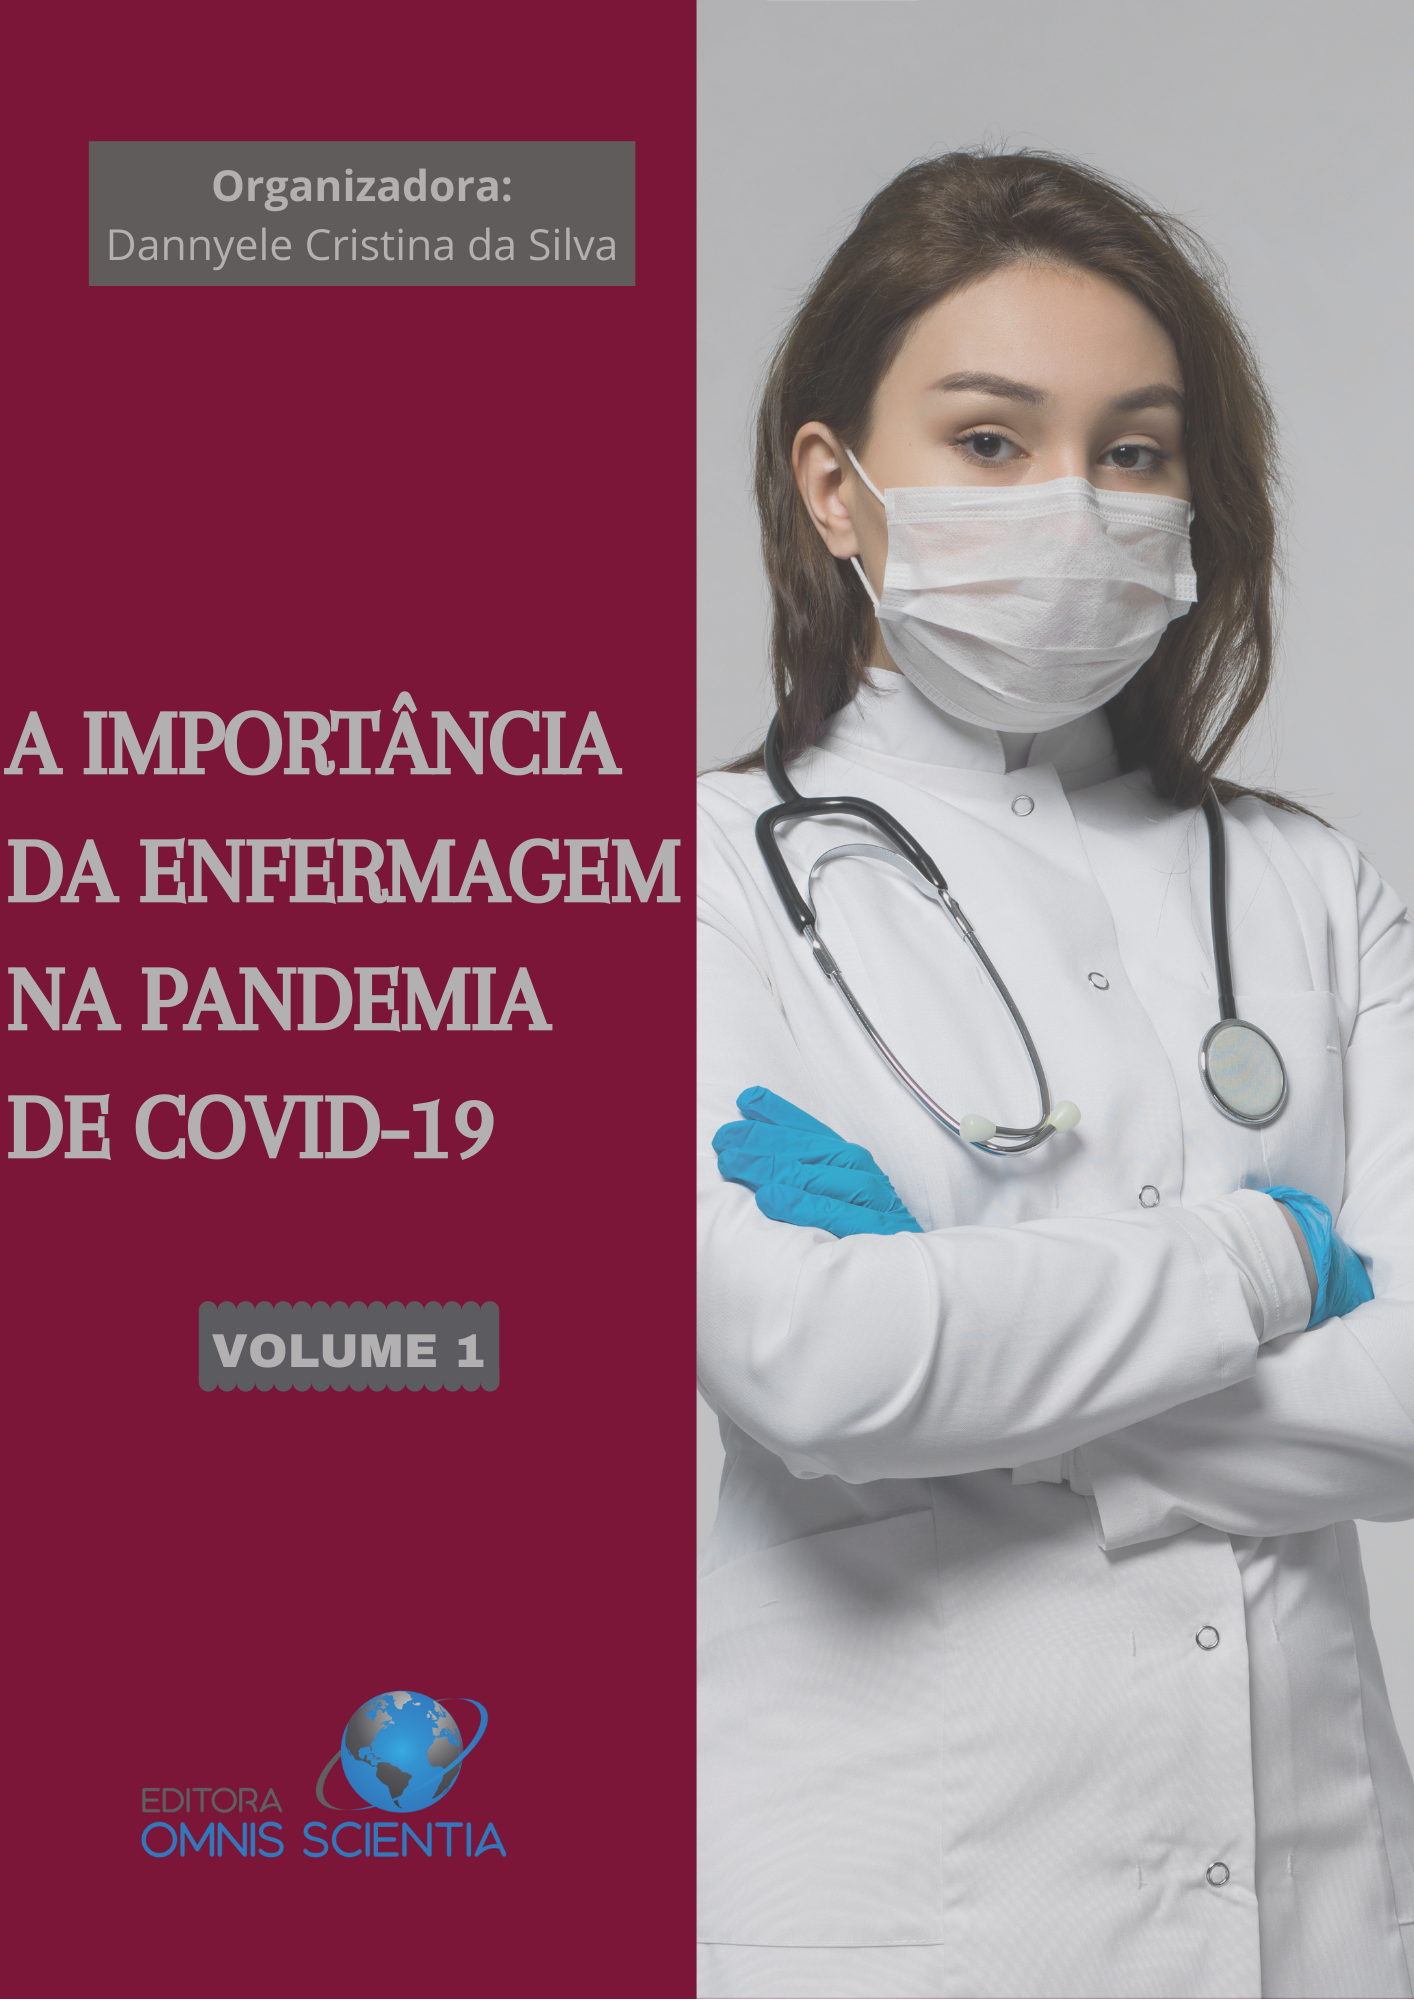 A IMPORTÂNCIA DA ENFERMAGEM NA PANDEMIA DE COVID-19